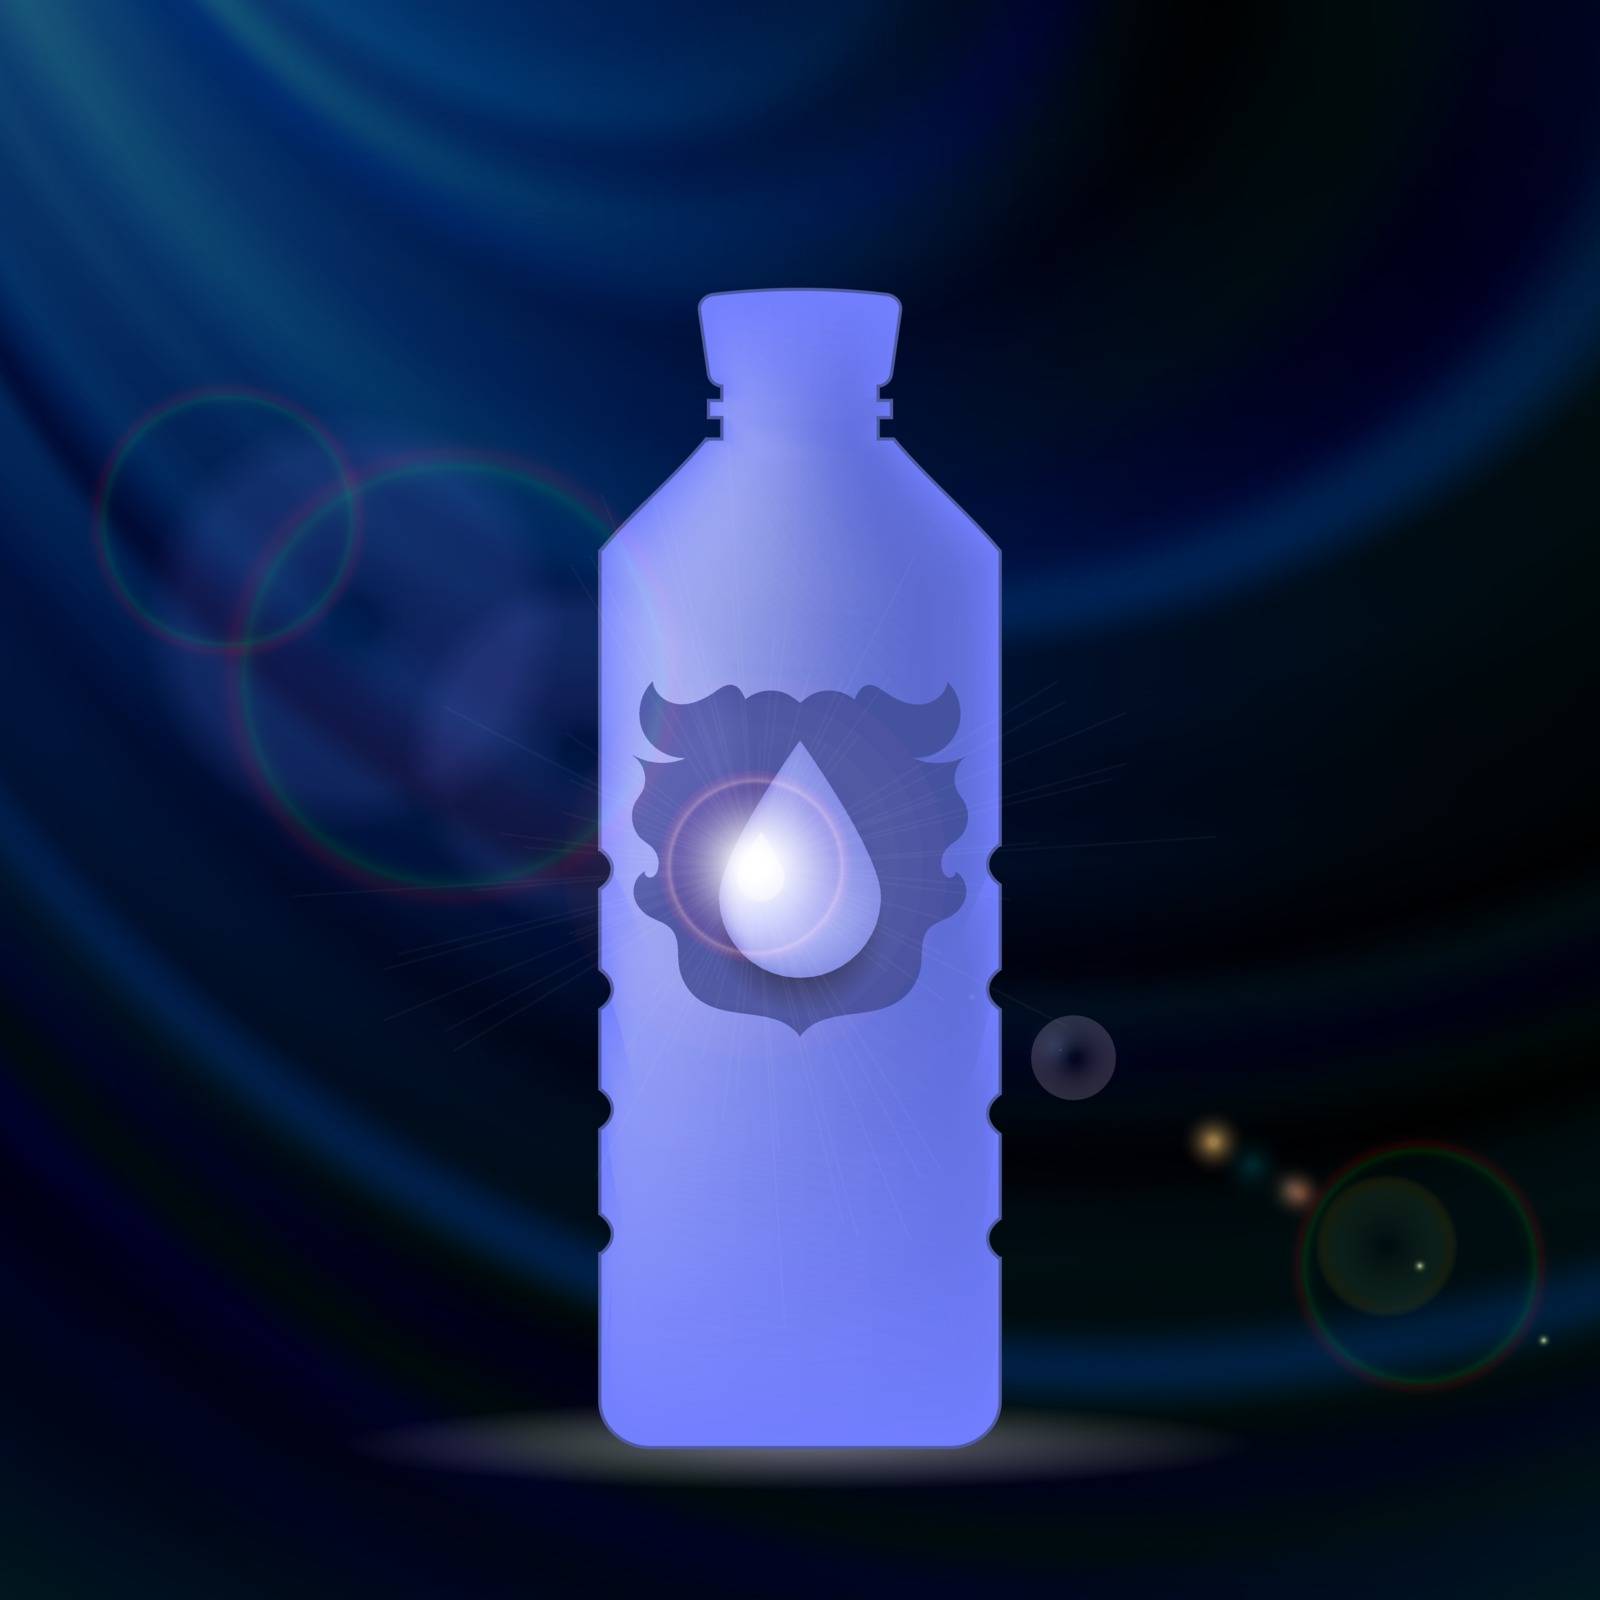 Mineral Water Plastic Bottle on Blue Wave Background